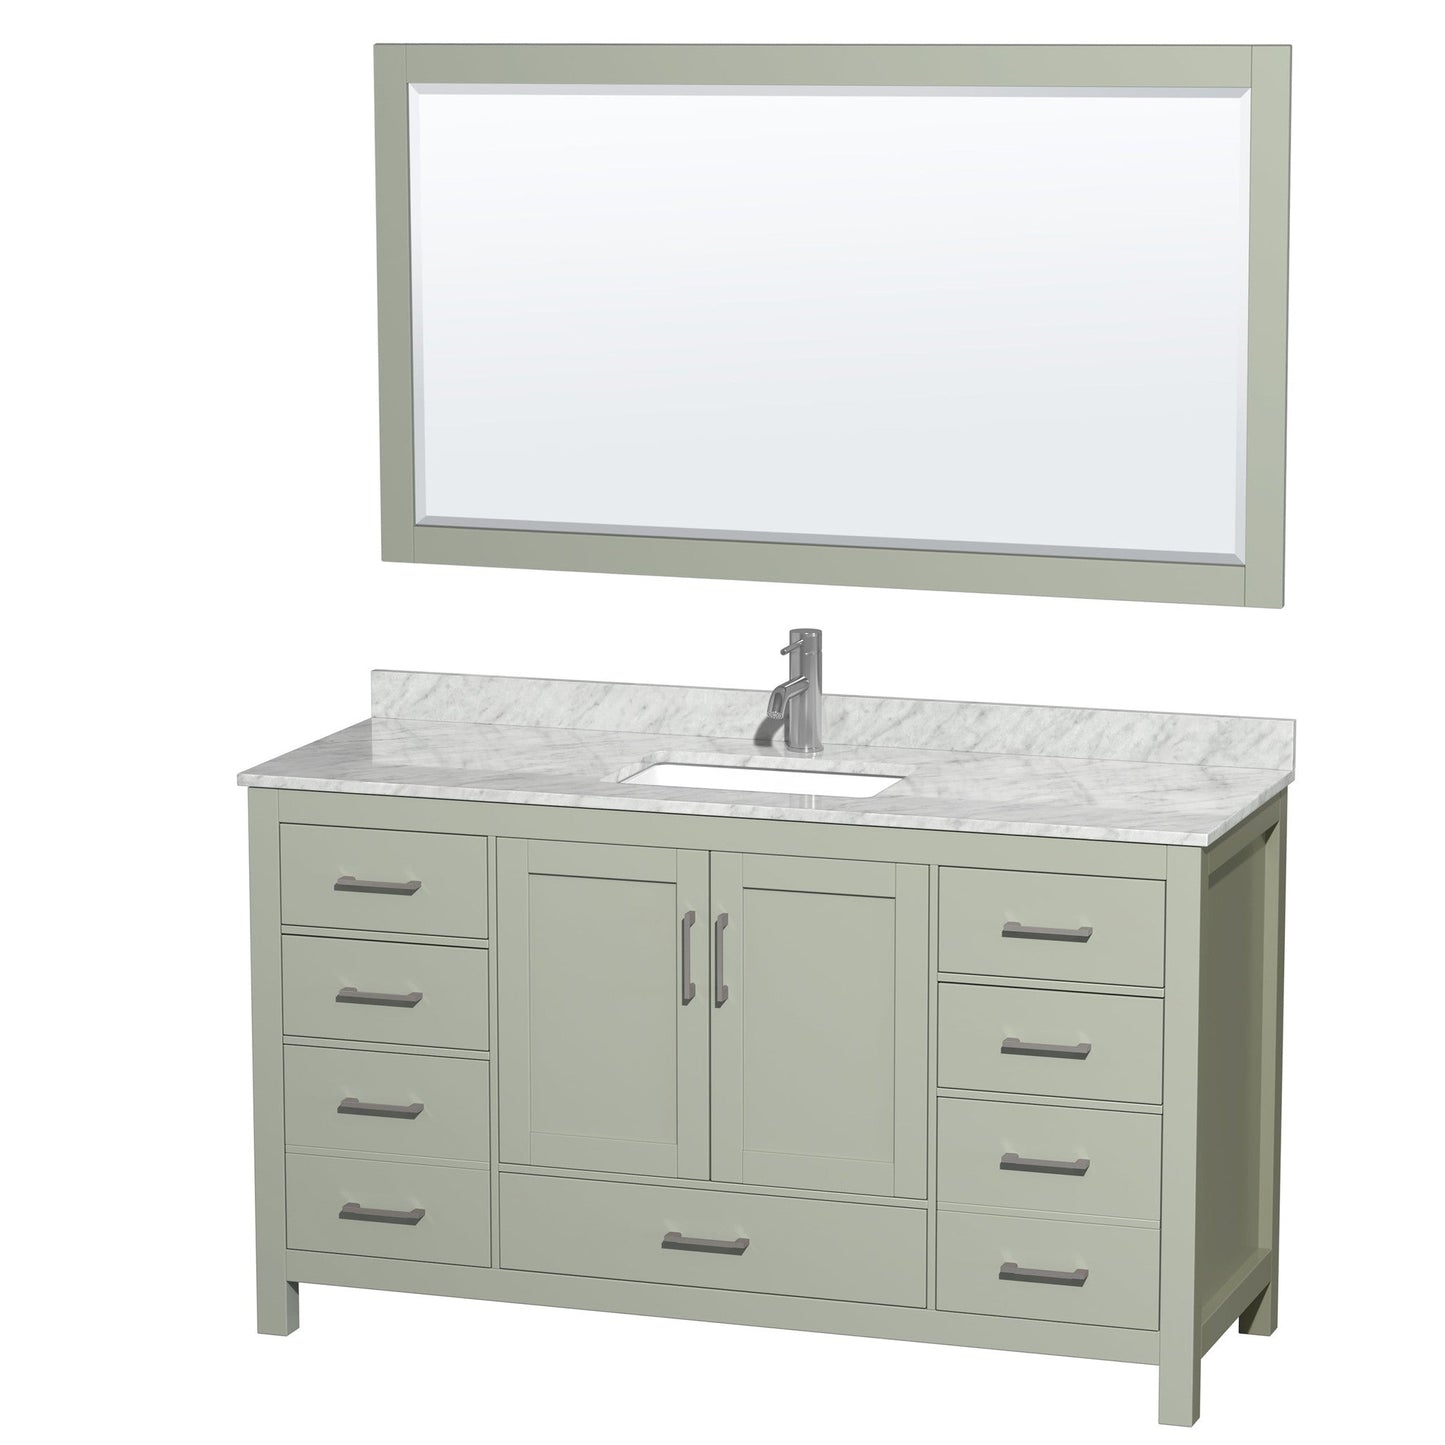 Sheffield 60" Single Bathroom Vanity in Light Green, White Carrara Marble Countertop, Undermount Square Sink, Brushed Nickel Trim, 58" Mirror